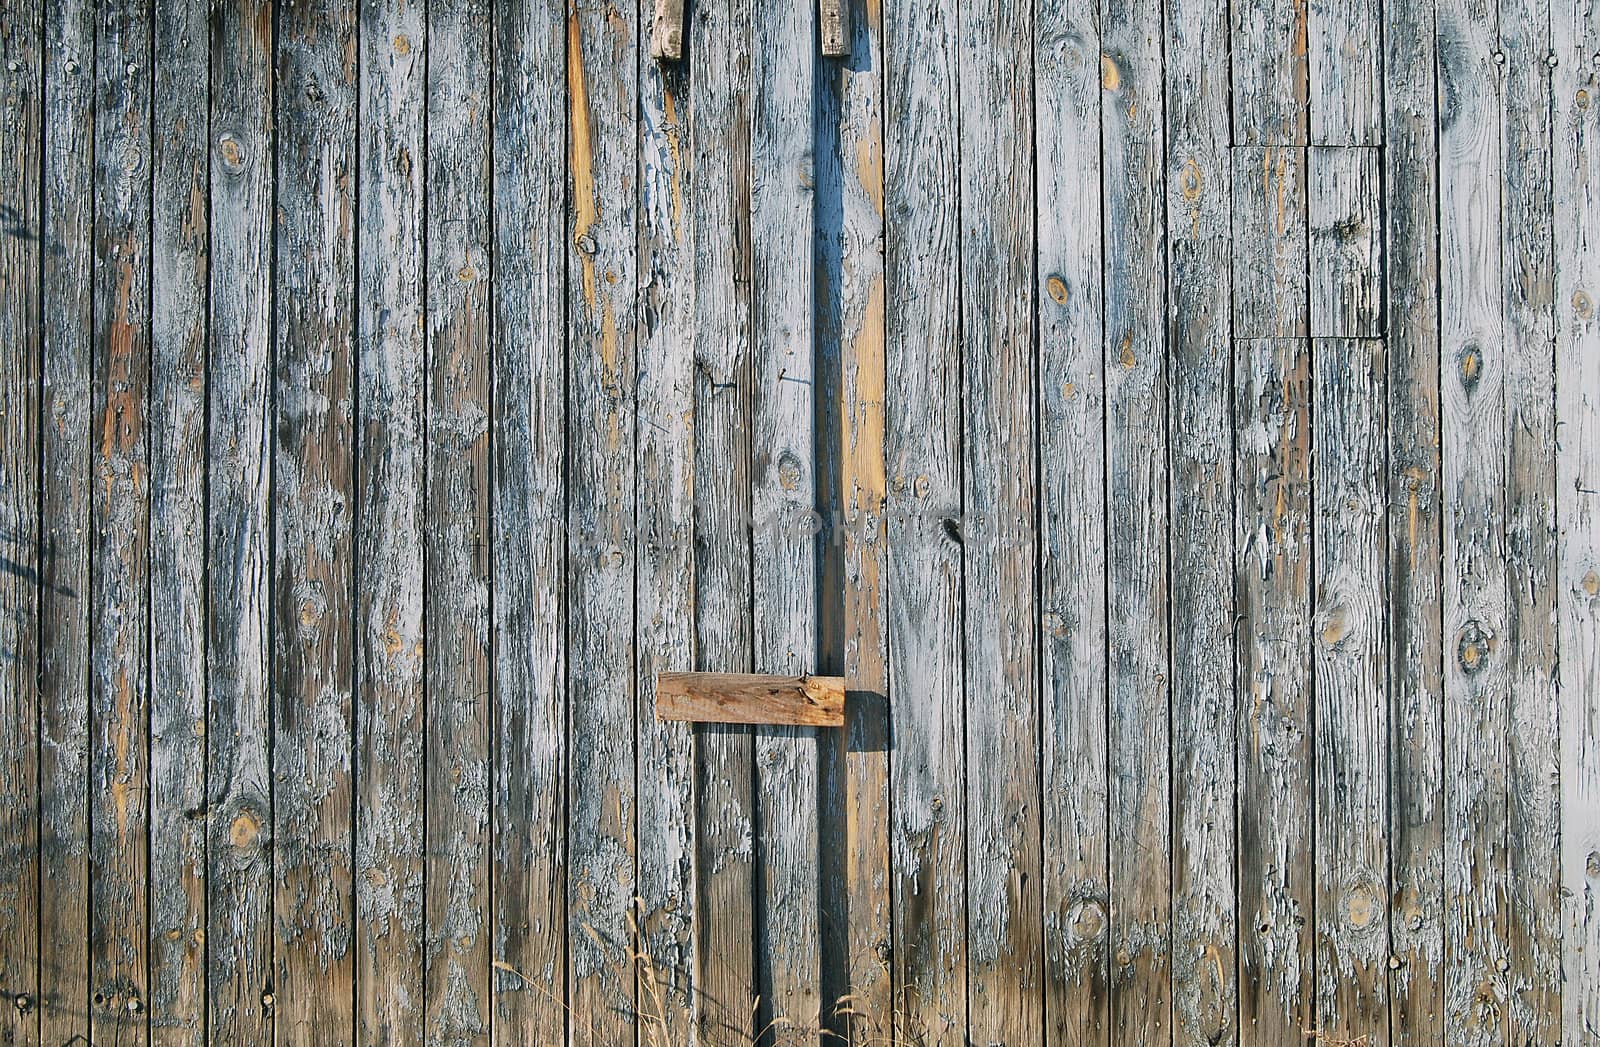 Old faded blue wooden fence door by varbenov